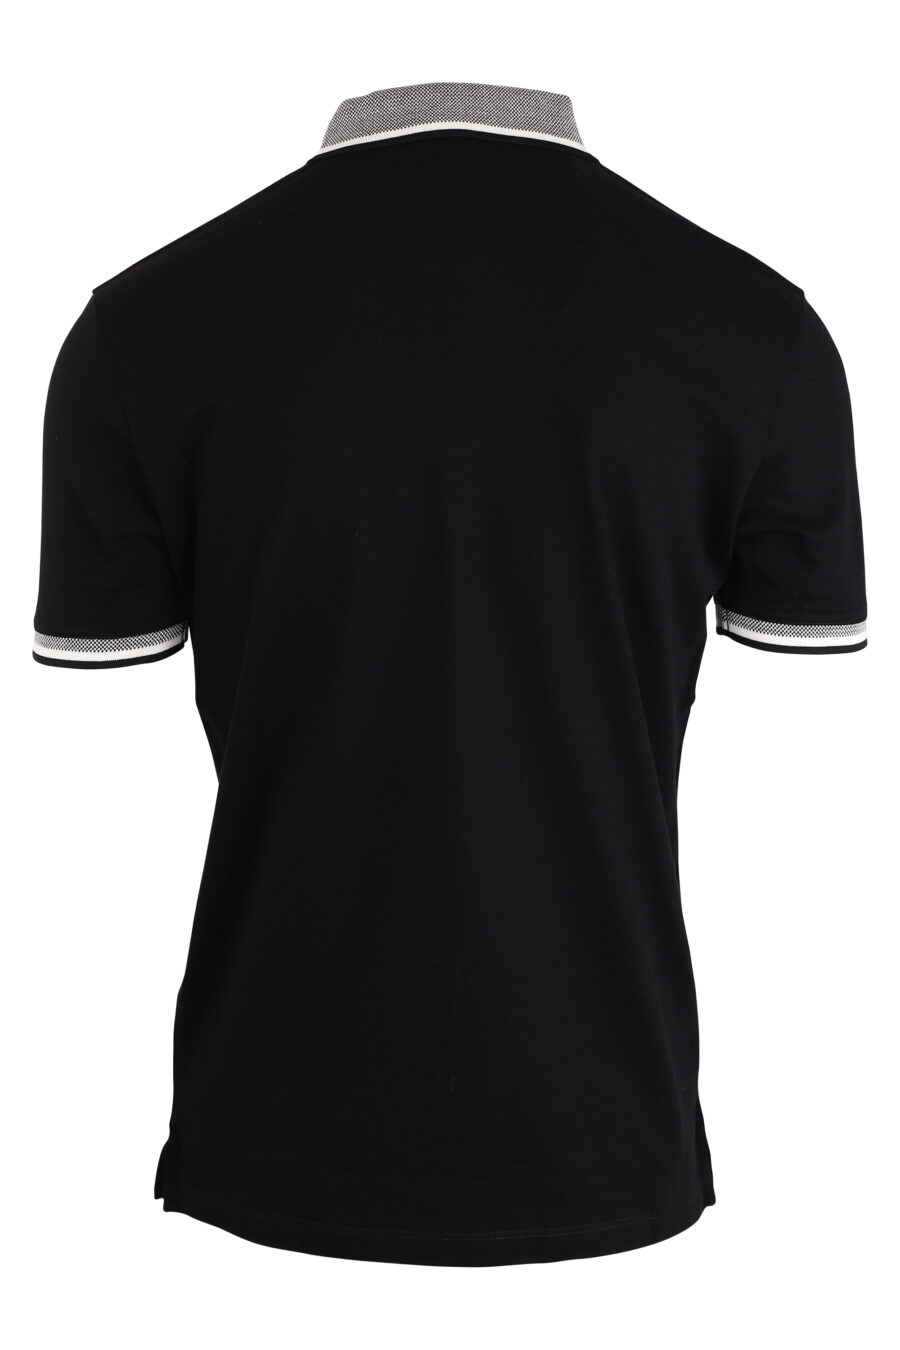 Black polo shirt with white eagle logo and white two-tone collar - IMG 4252